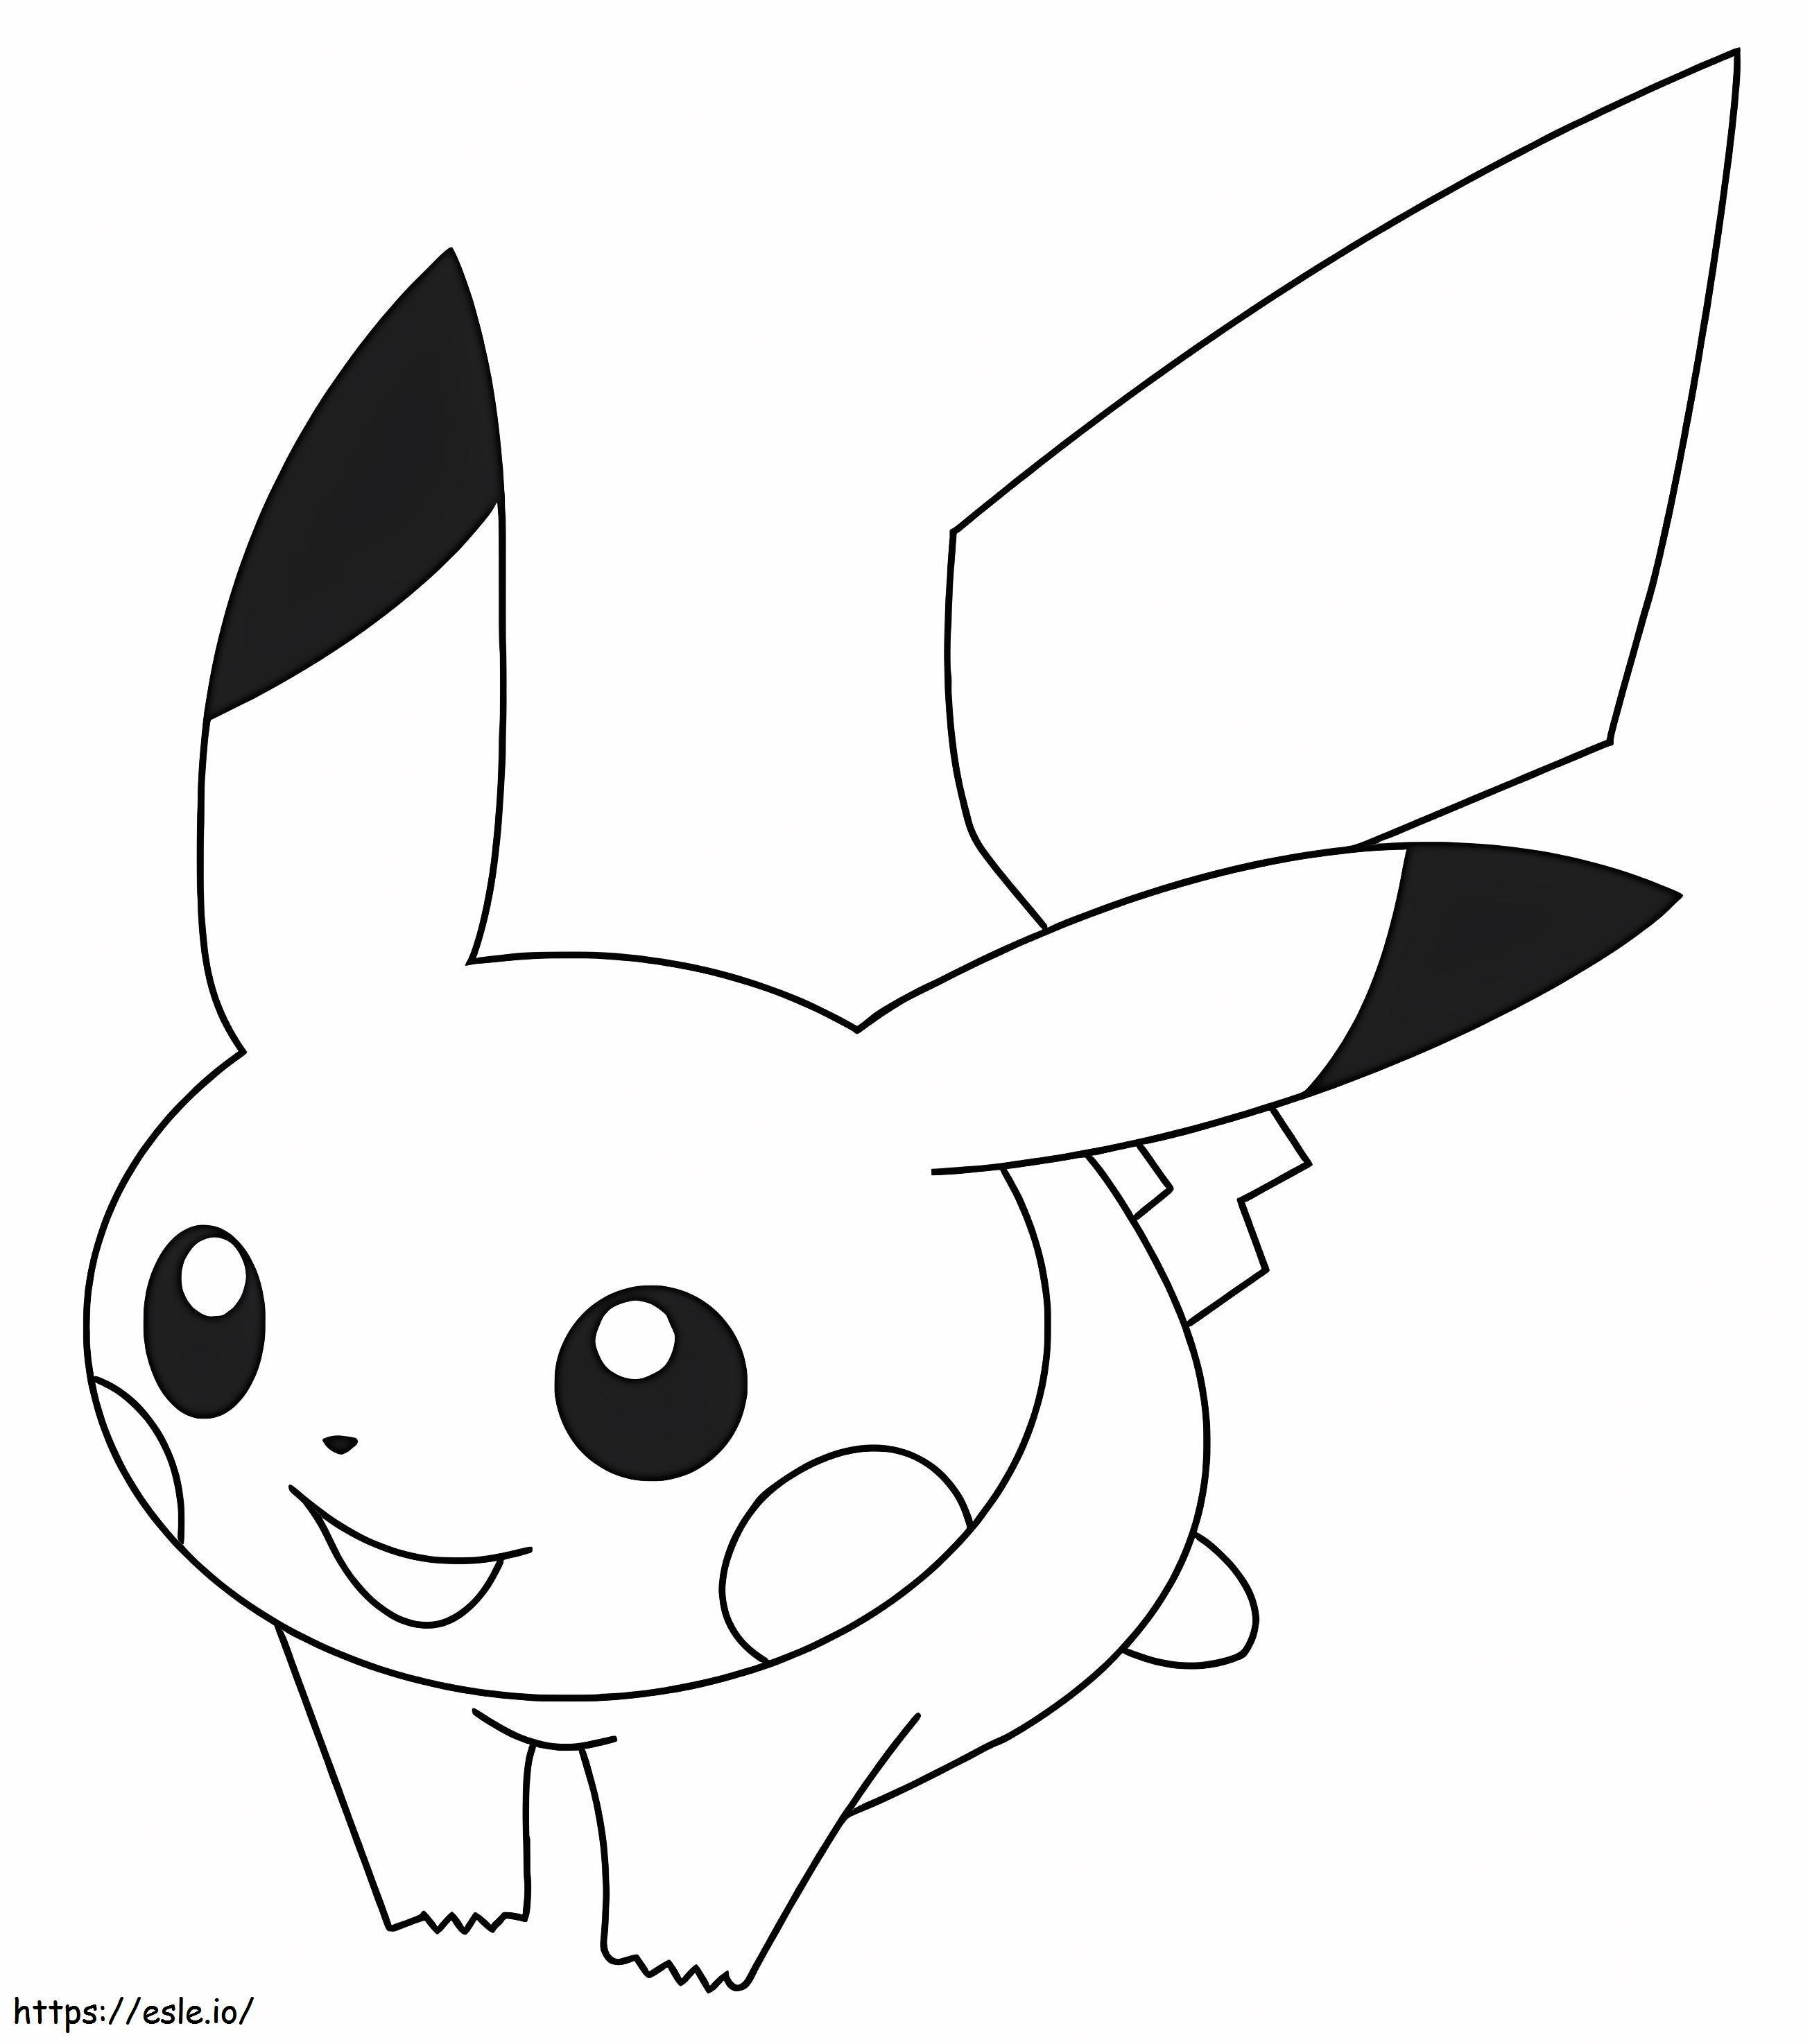 Kawaii Pikachu coloring page